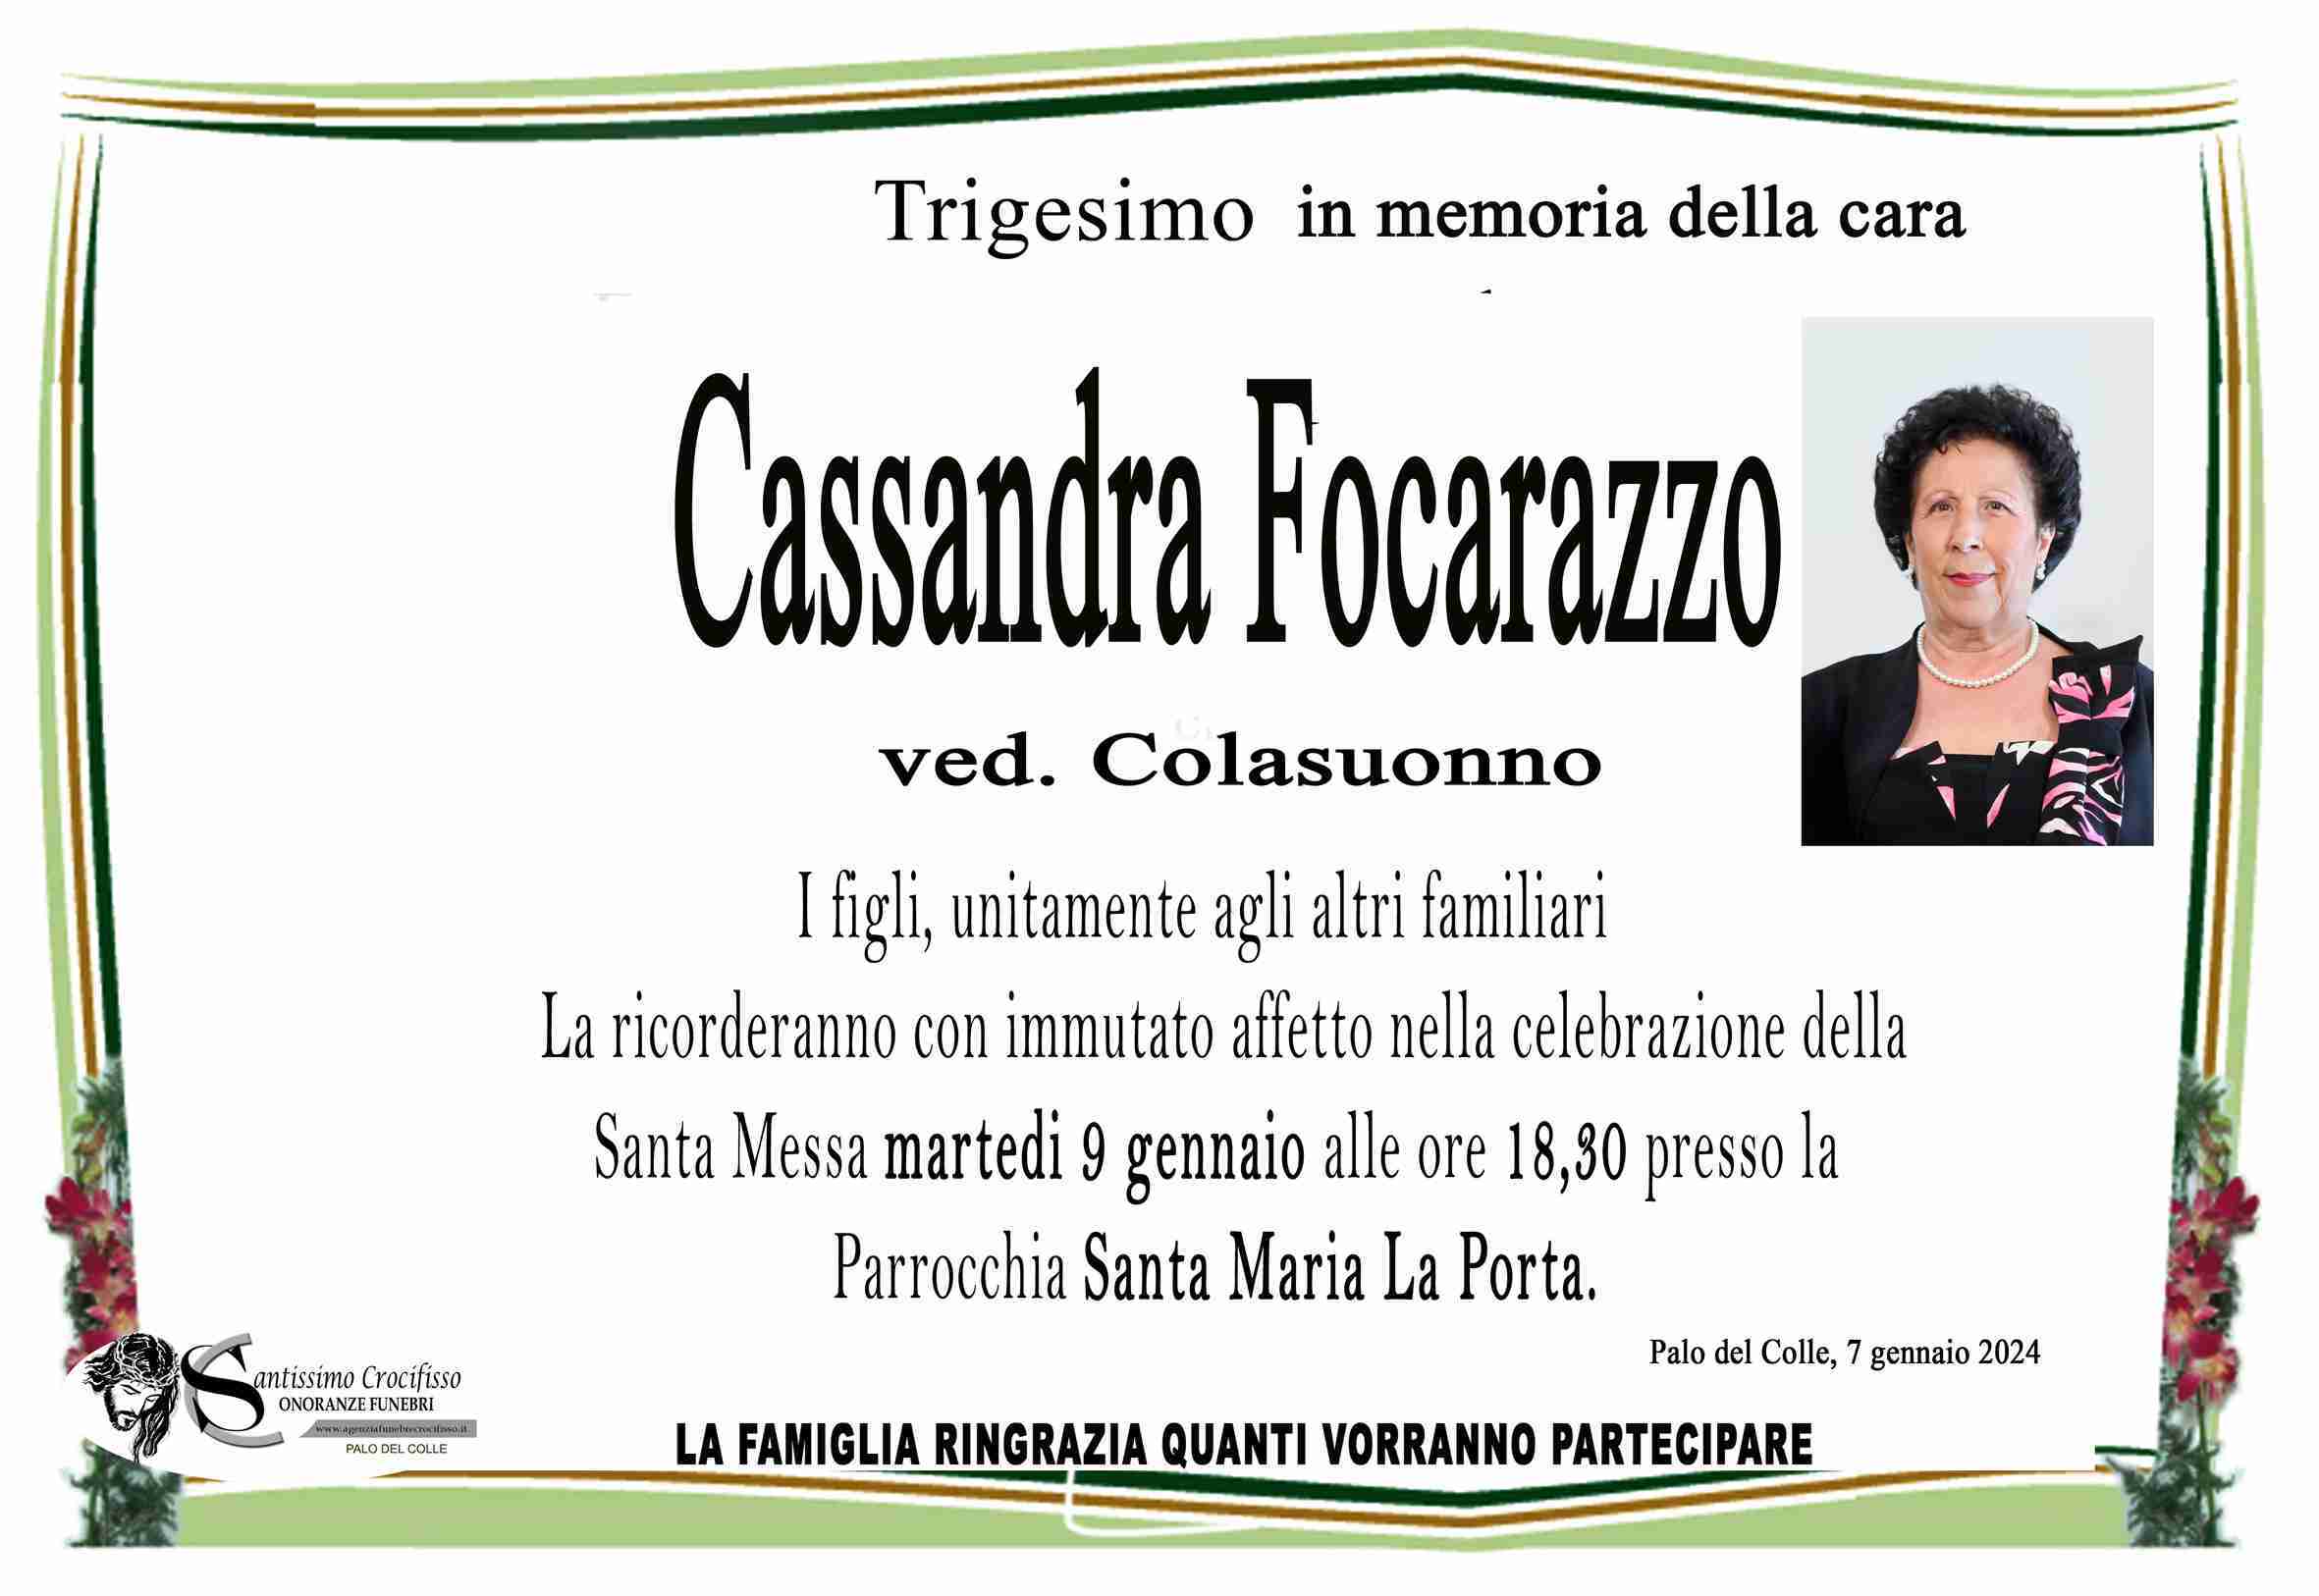 Cassandra Focarazzo